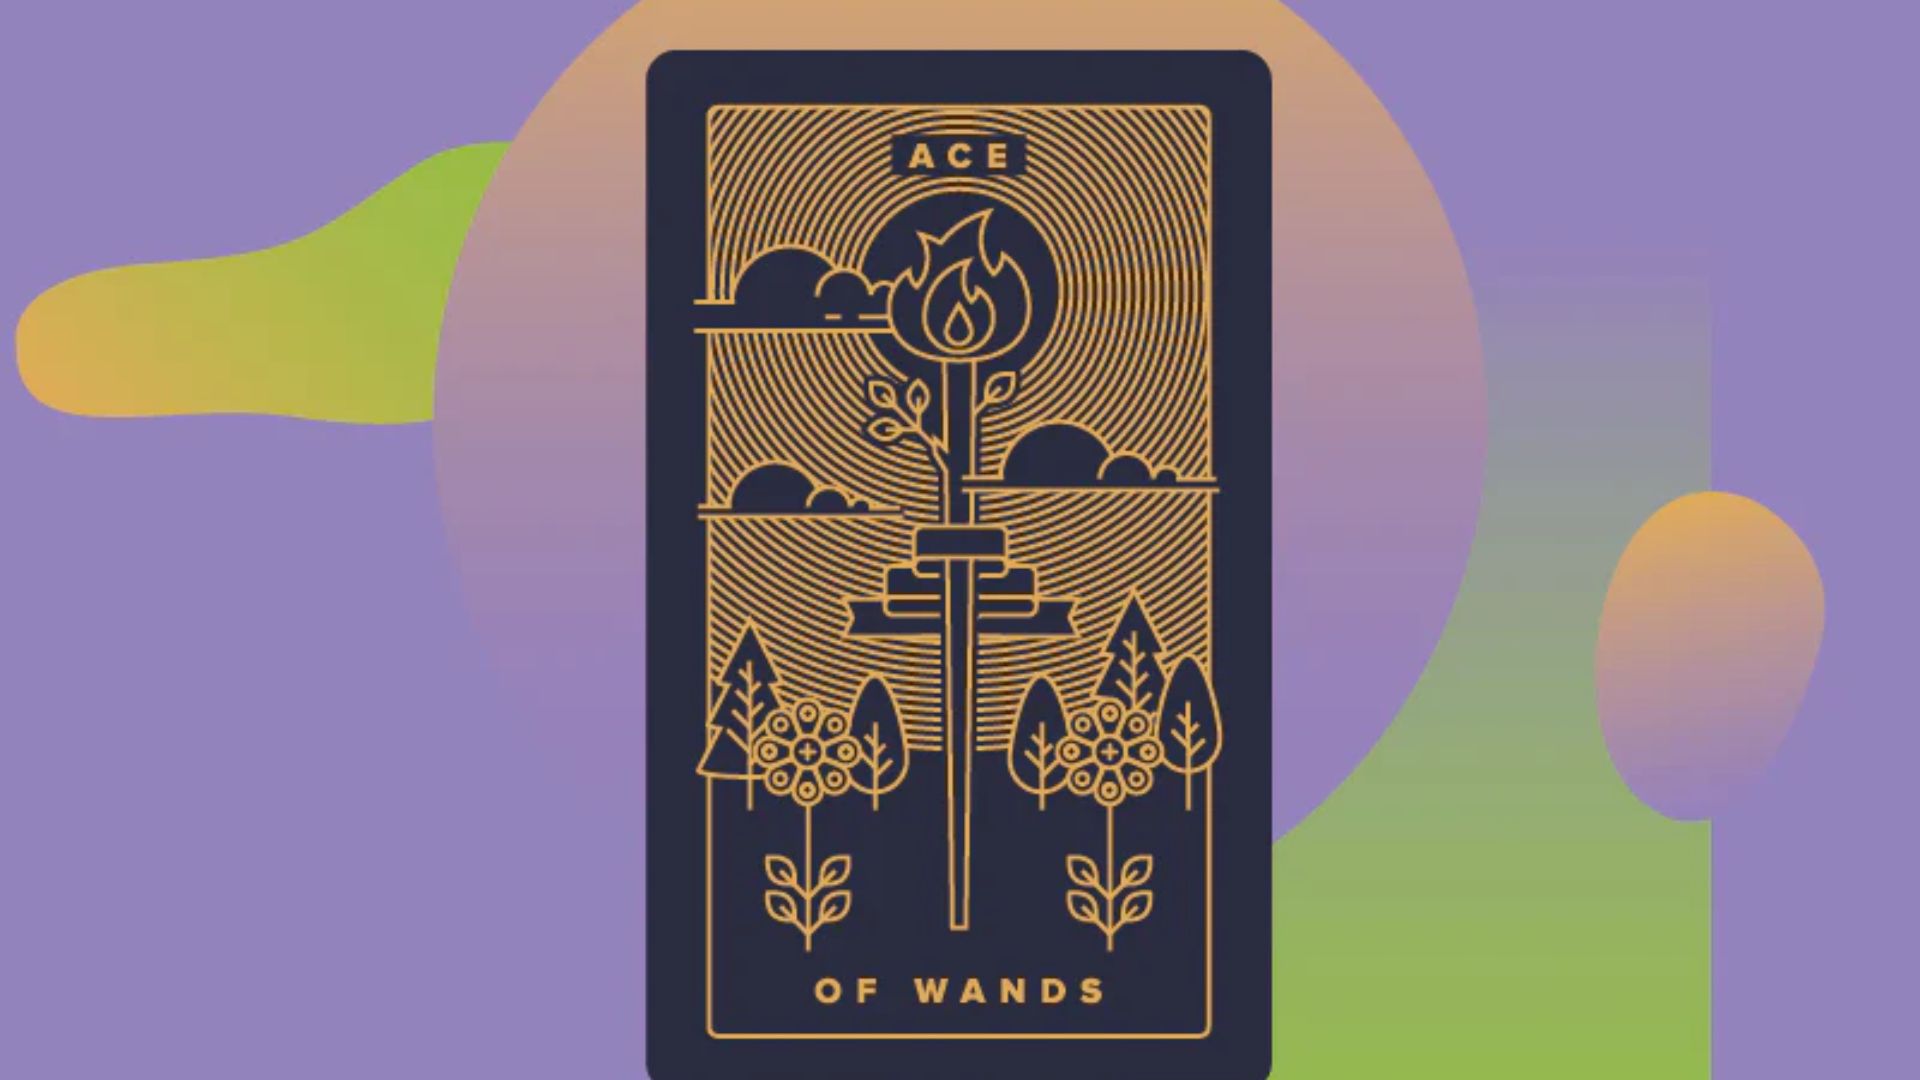 Black And Golden Ace Of Wands Tarot Card